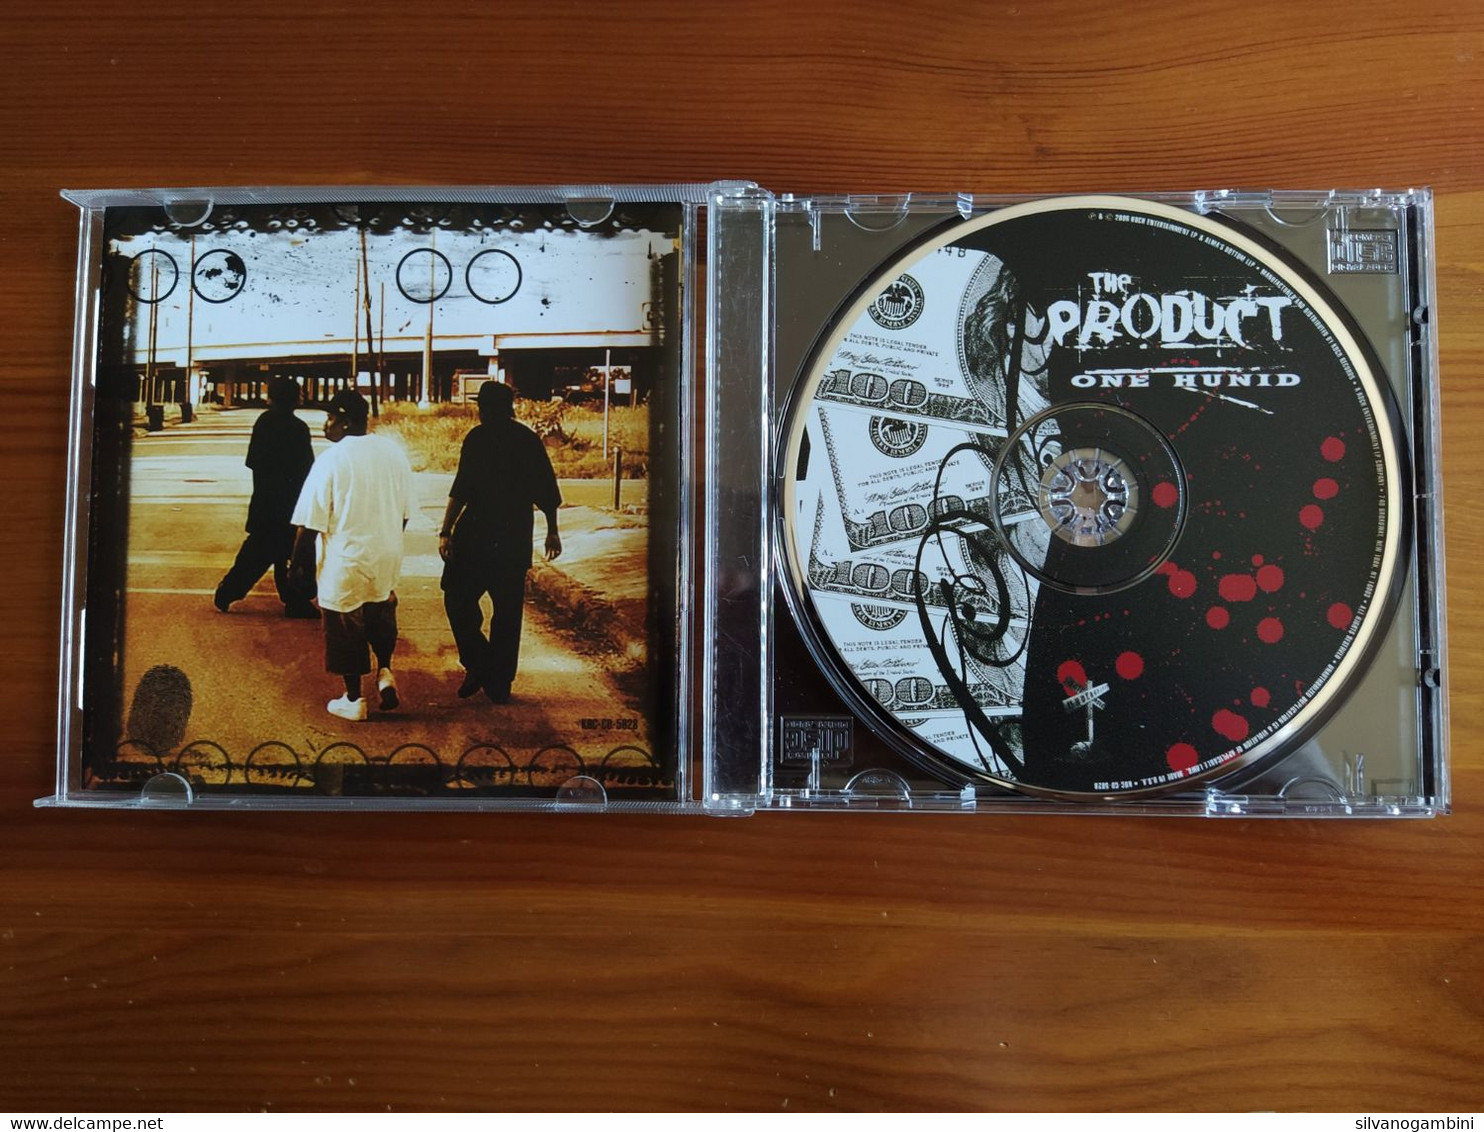 CD MUSICALE SCARFACE - THE PRODUCT - ONE HUNID - Rap En Hip Hop